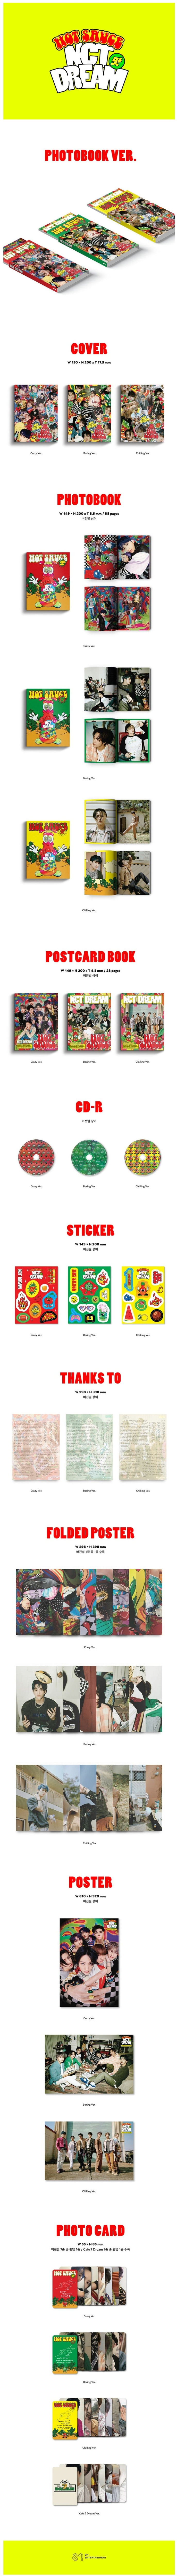 Korea Pop Store NCT DREAM - VOL.1 HOT SAUCE (PHOTO BOOK VERSION) Kawaii Gifts 8809633189821